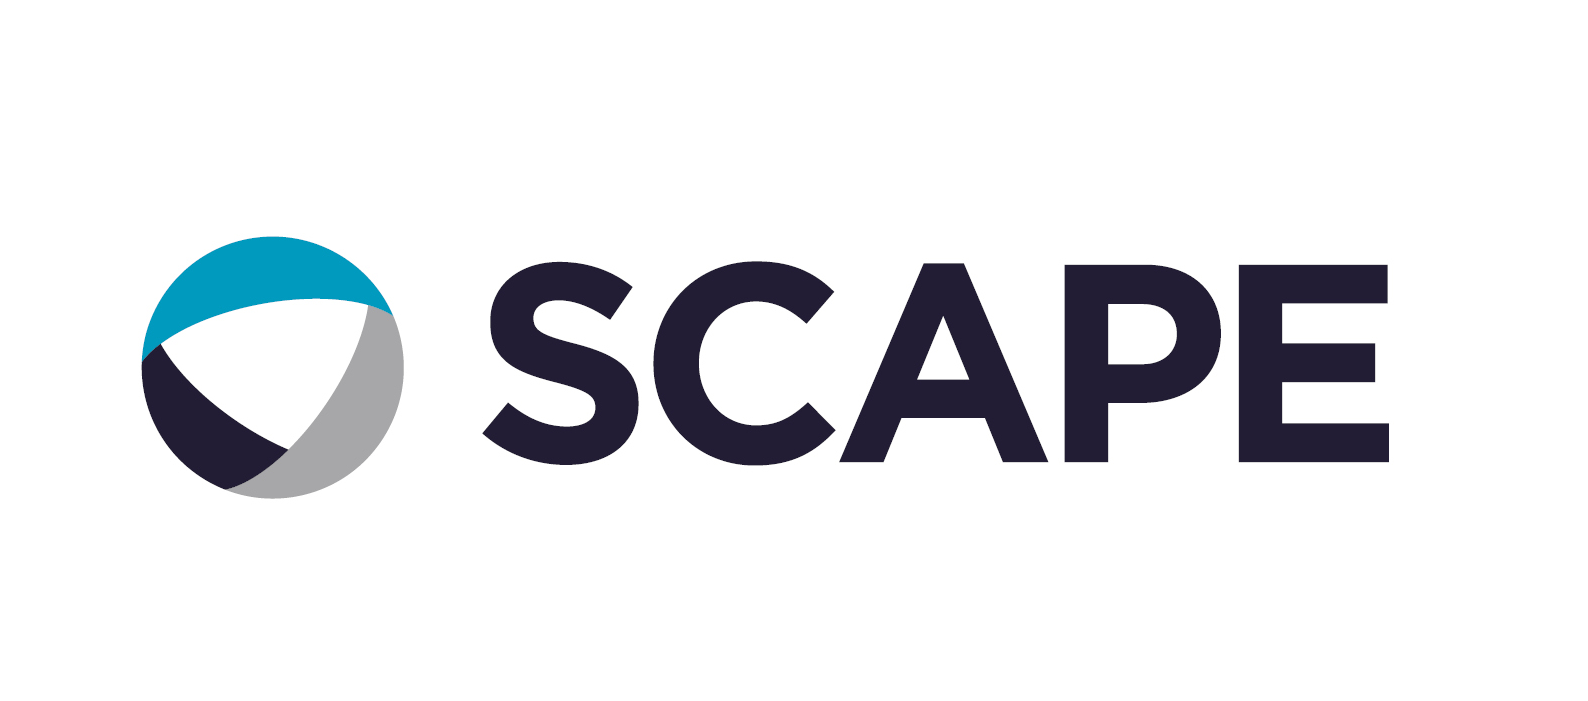 Scape logo2.jpg